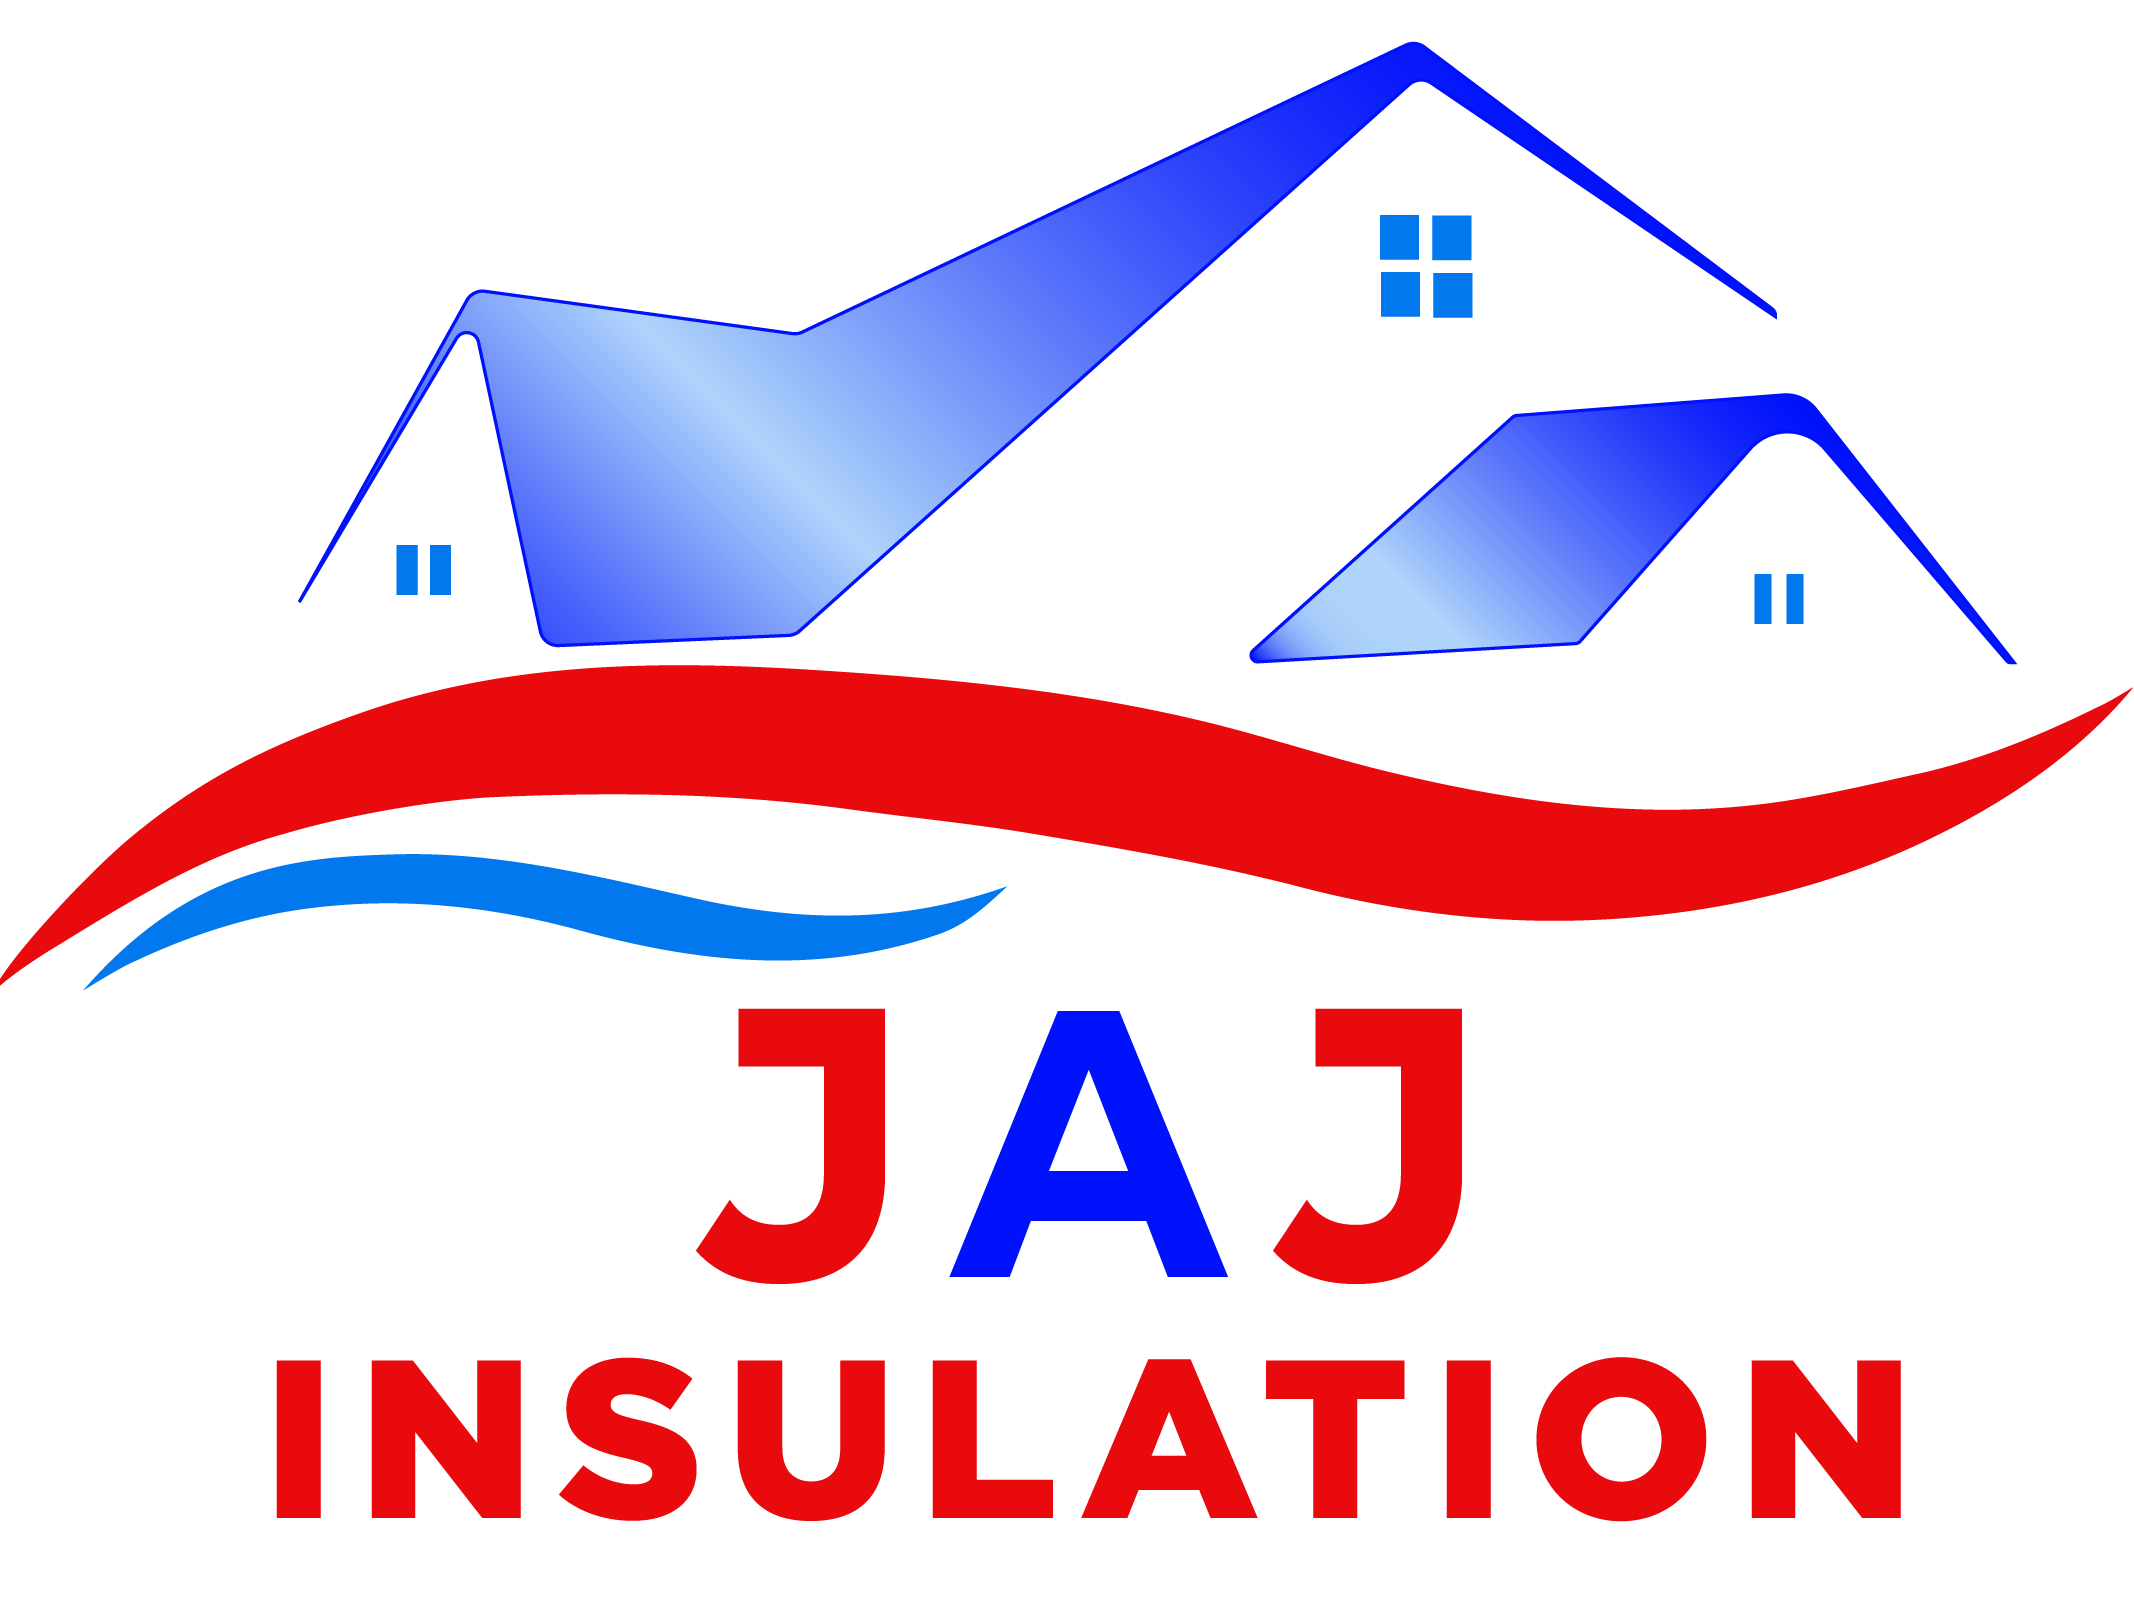 jaj insulation logo